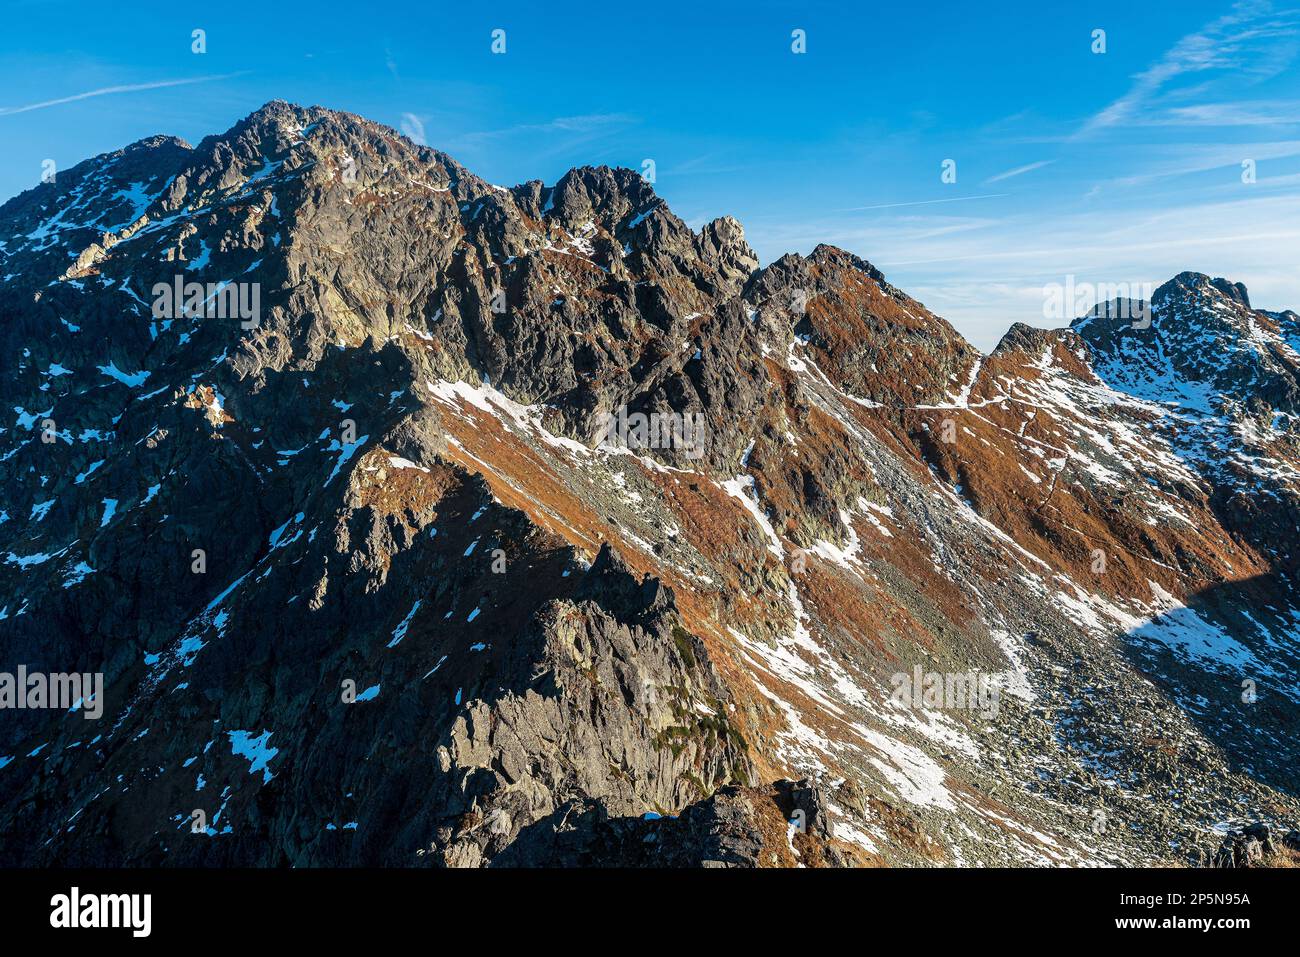 Amazing scenery of Sweinica, Zawrat and Zmarzle Czuby mountain peaks in autumn Tatra mountains Stock Photo